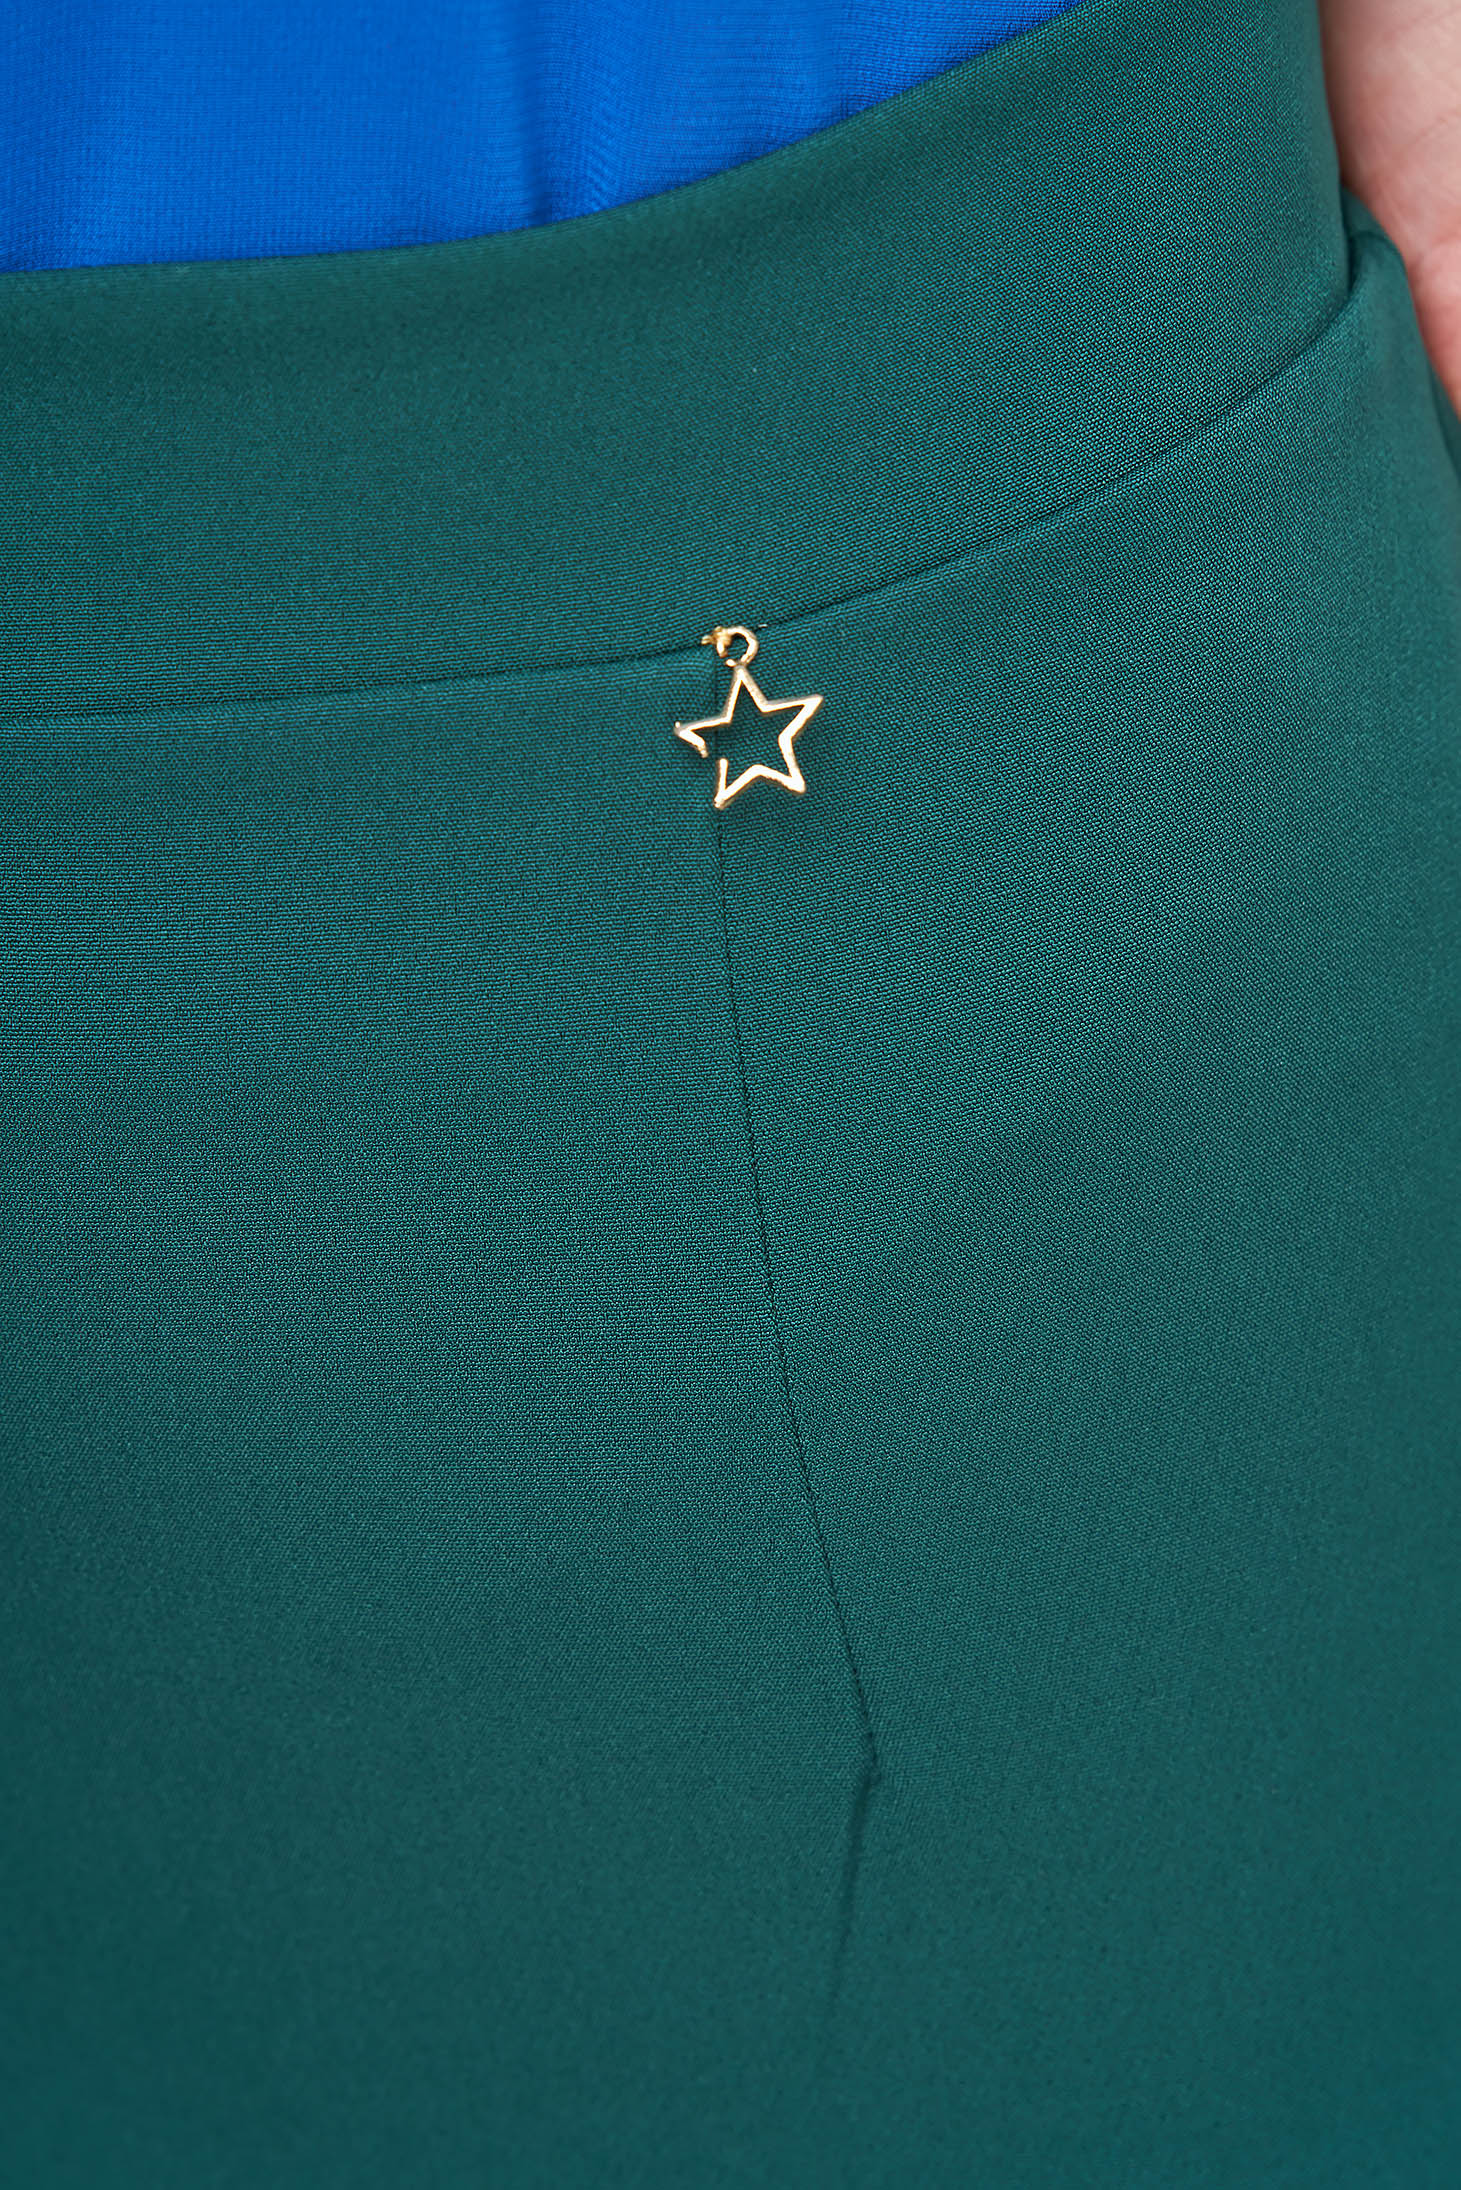 Fusta din stofa usor elastica verde-inchis tip creion cu talie inalta - StarShinerS 6 - StarShinerS.ro